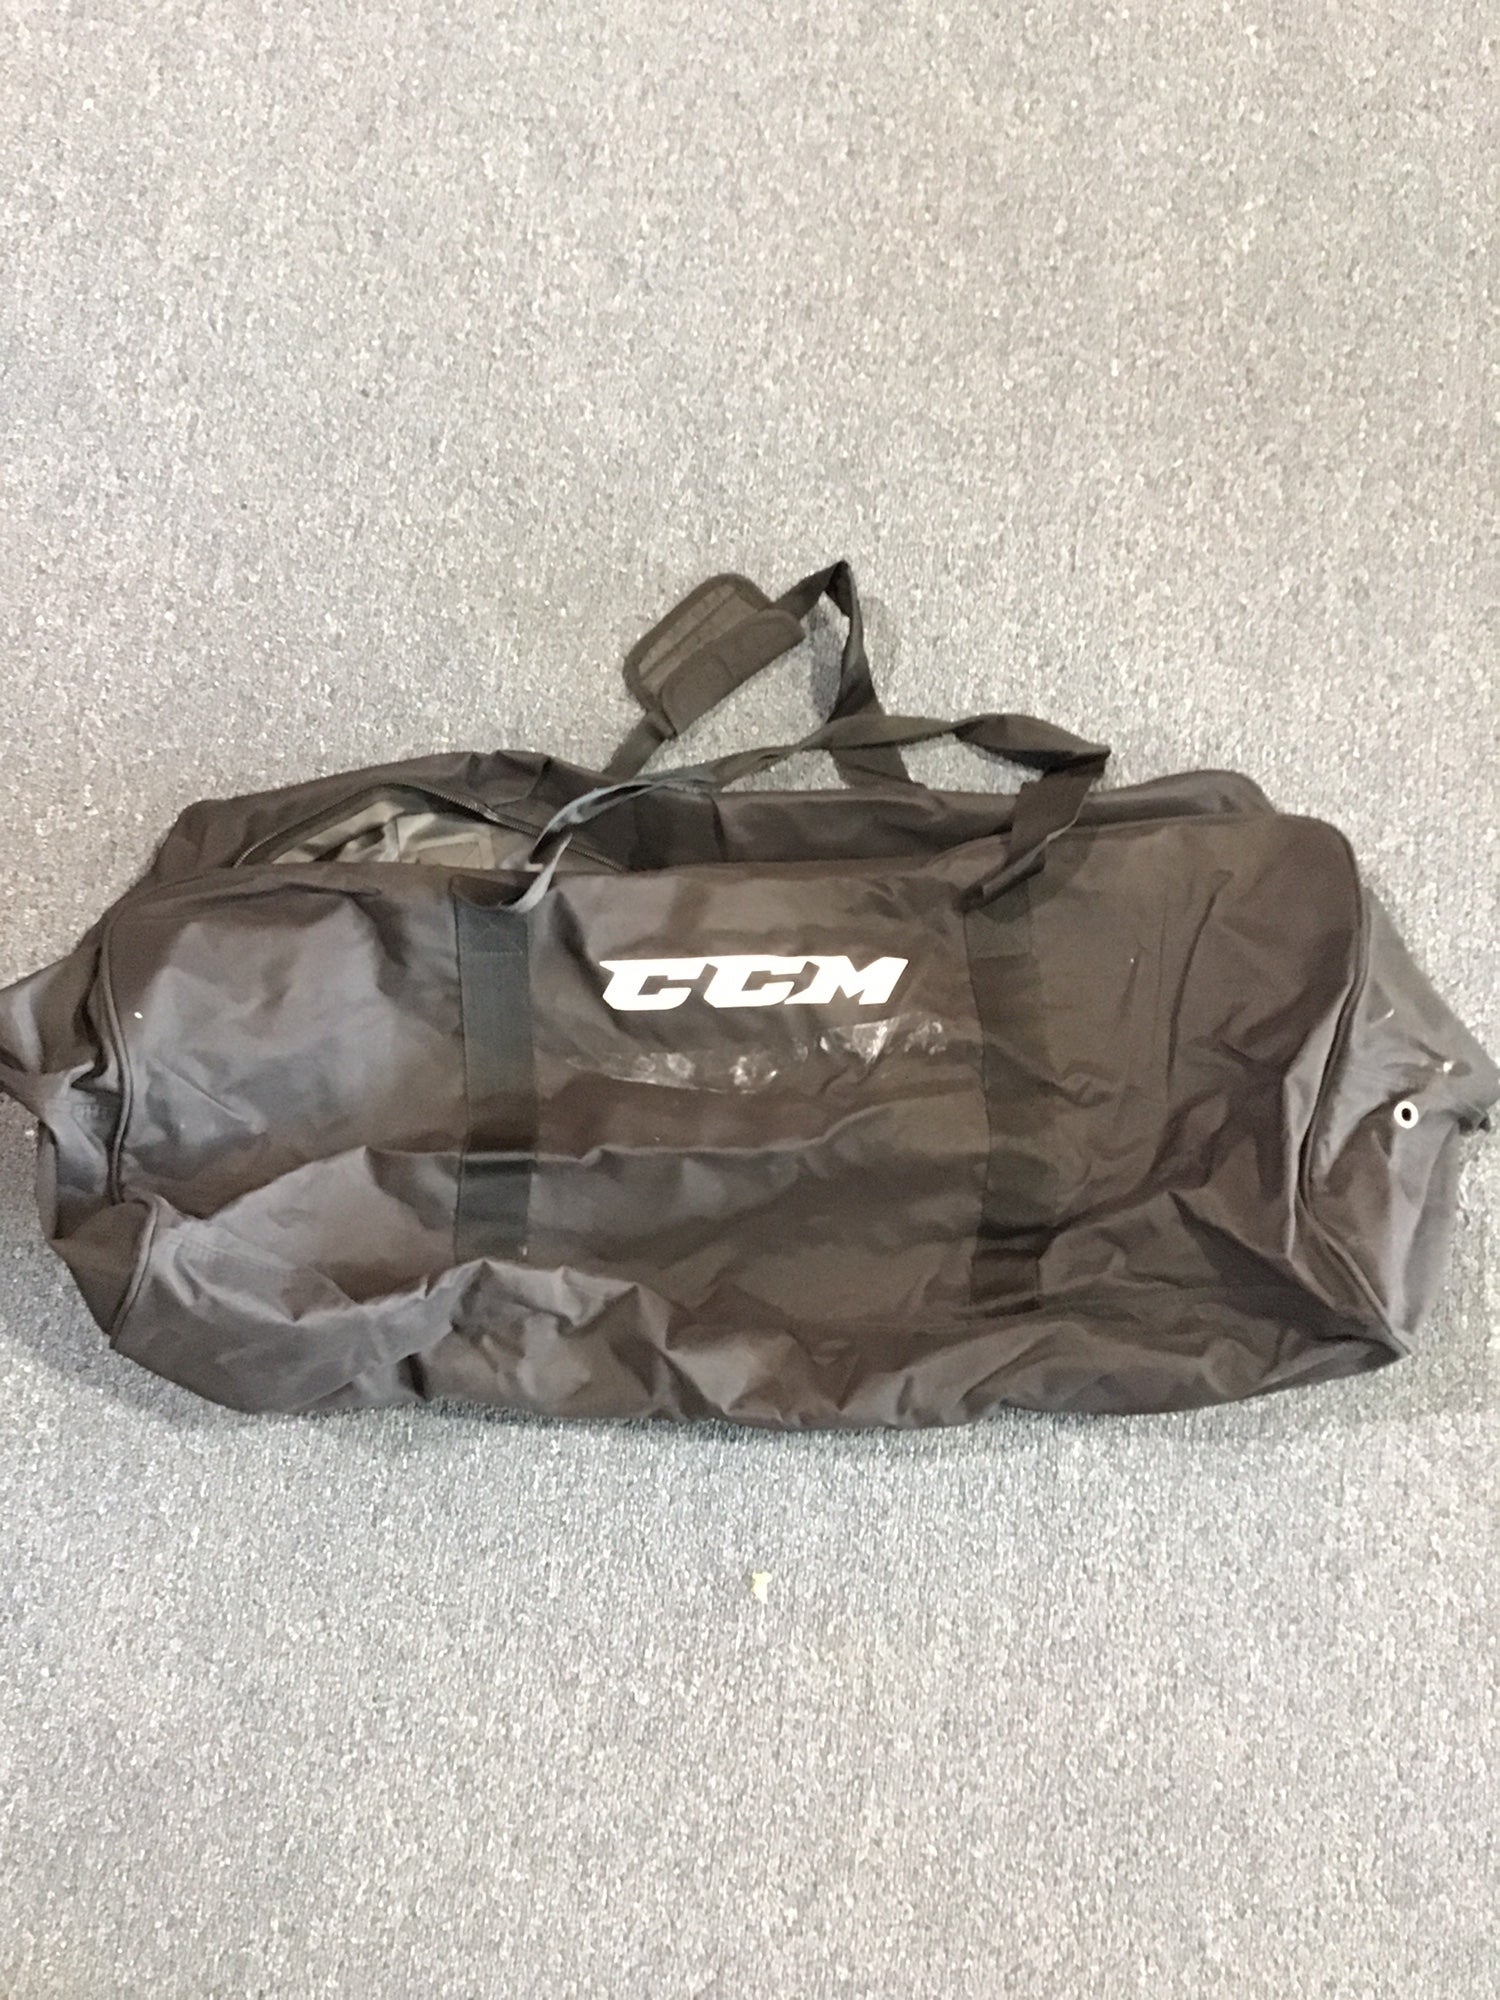 CCM 340 Player Basic Carry Bag